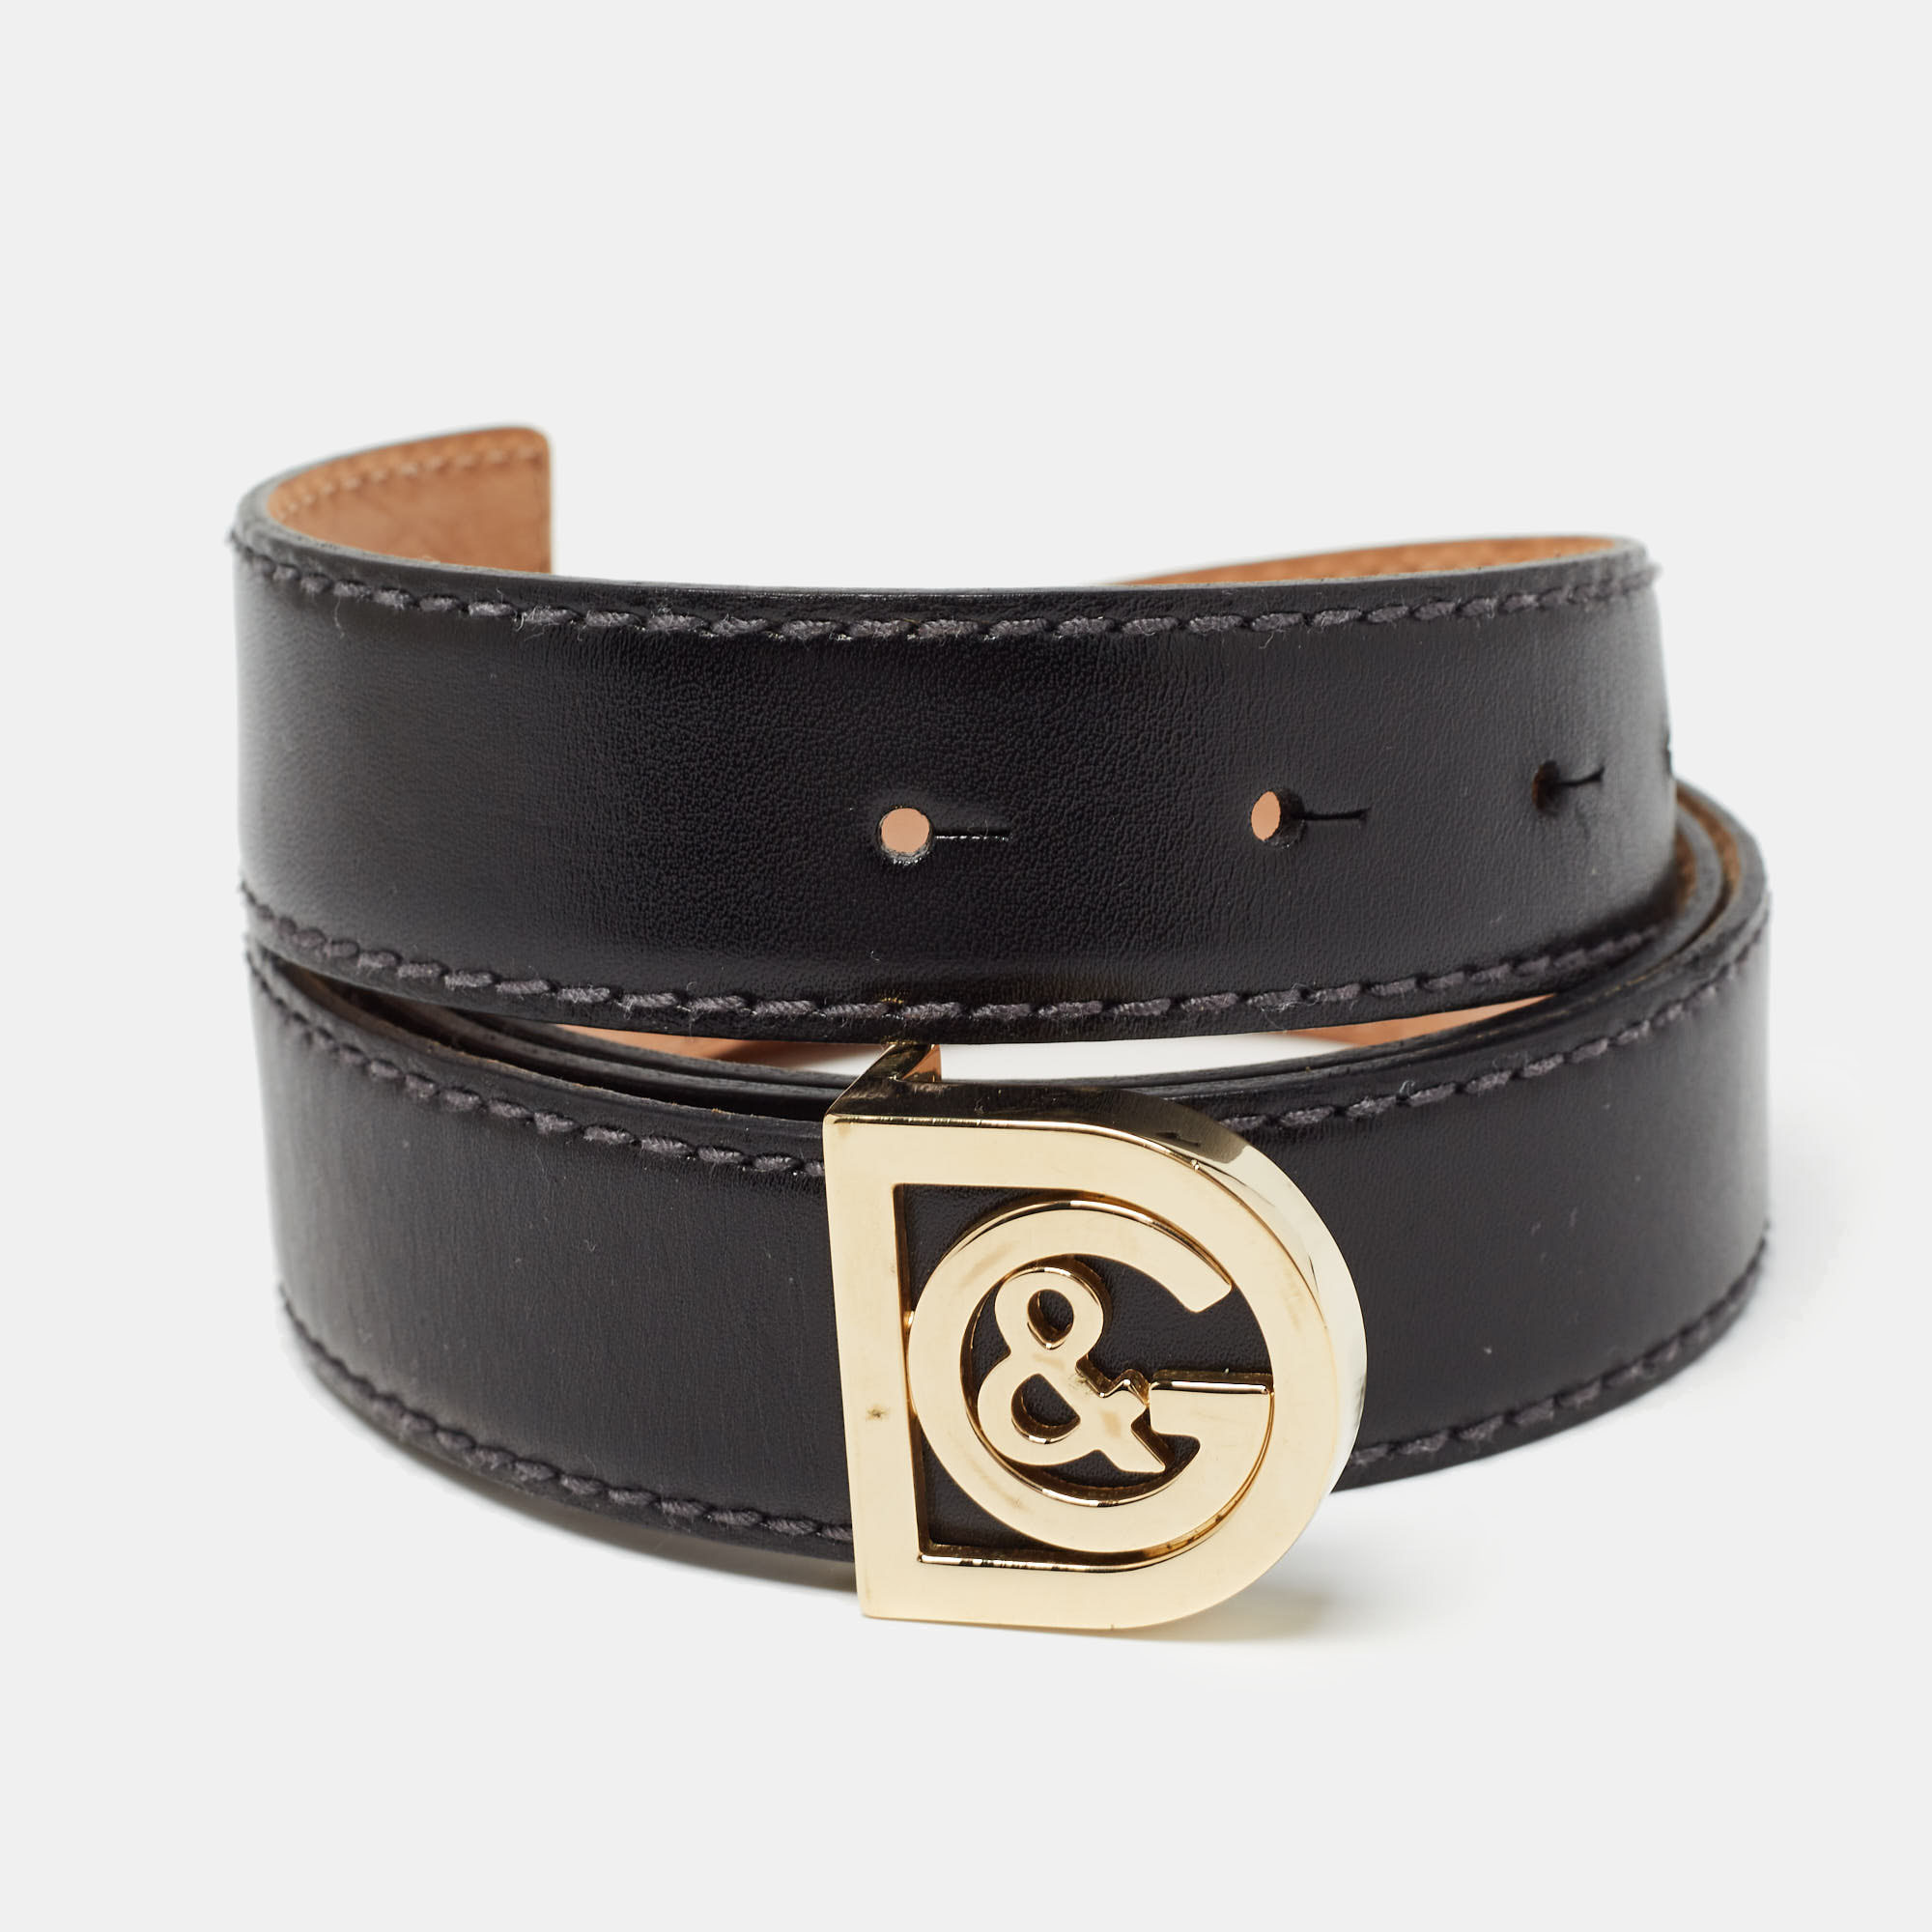 D&g black leather dg logo buckle belt 95cm